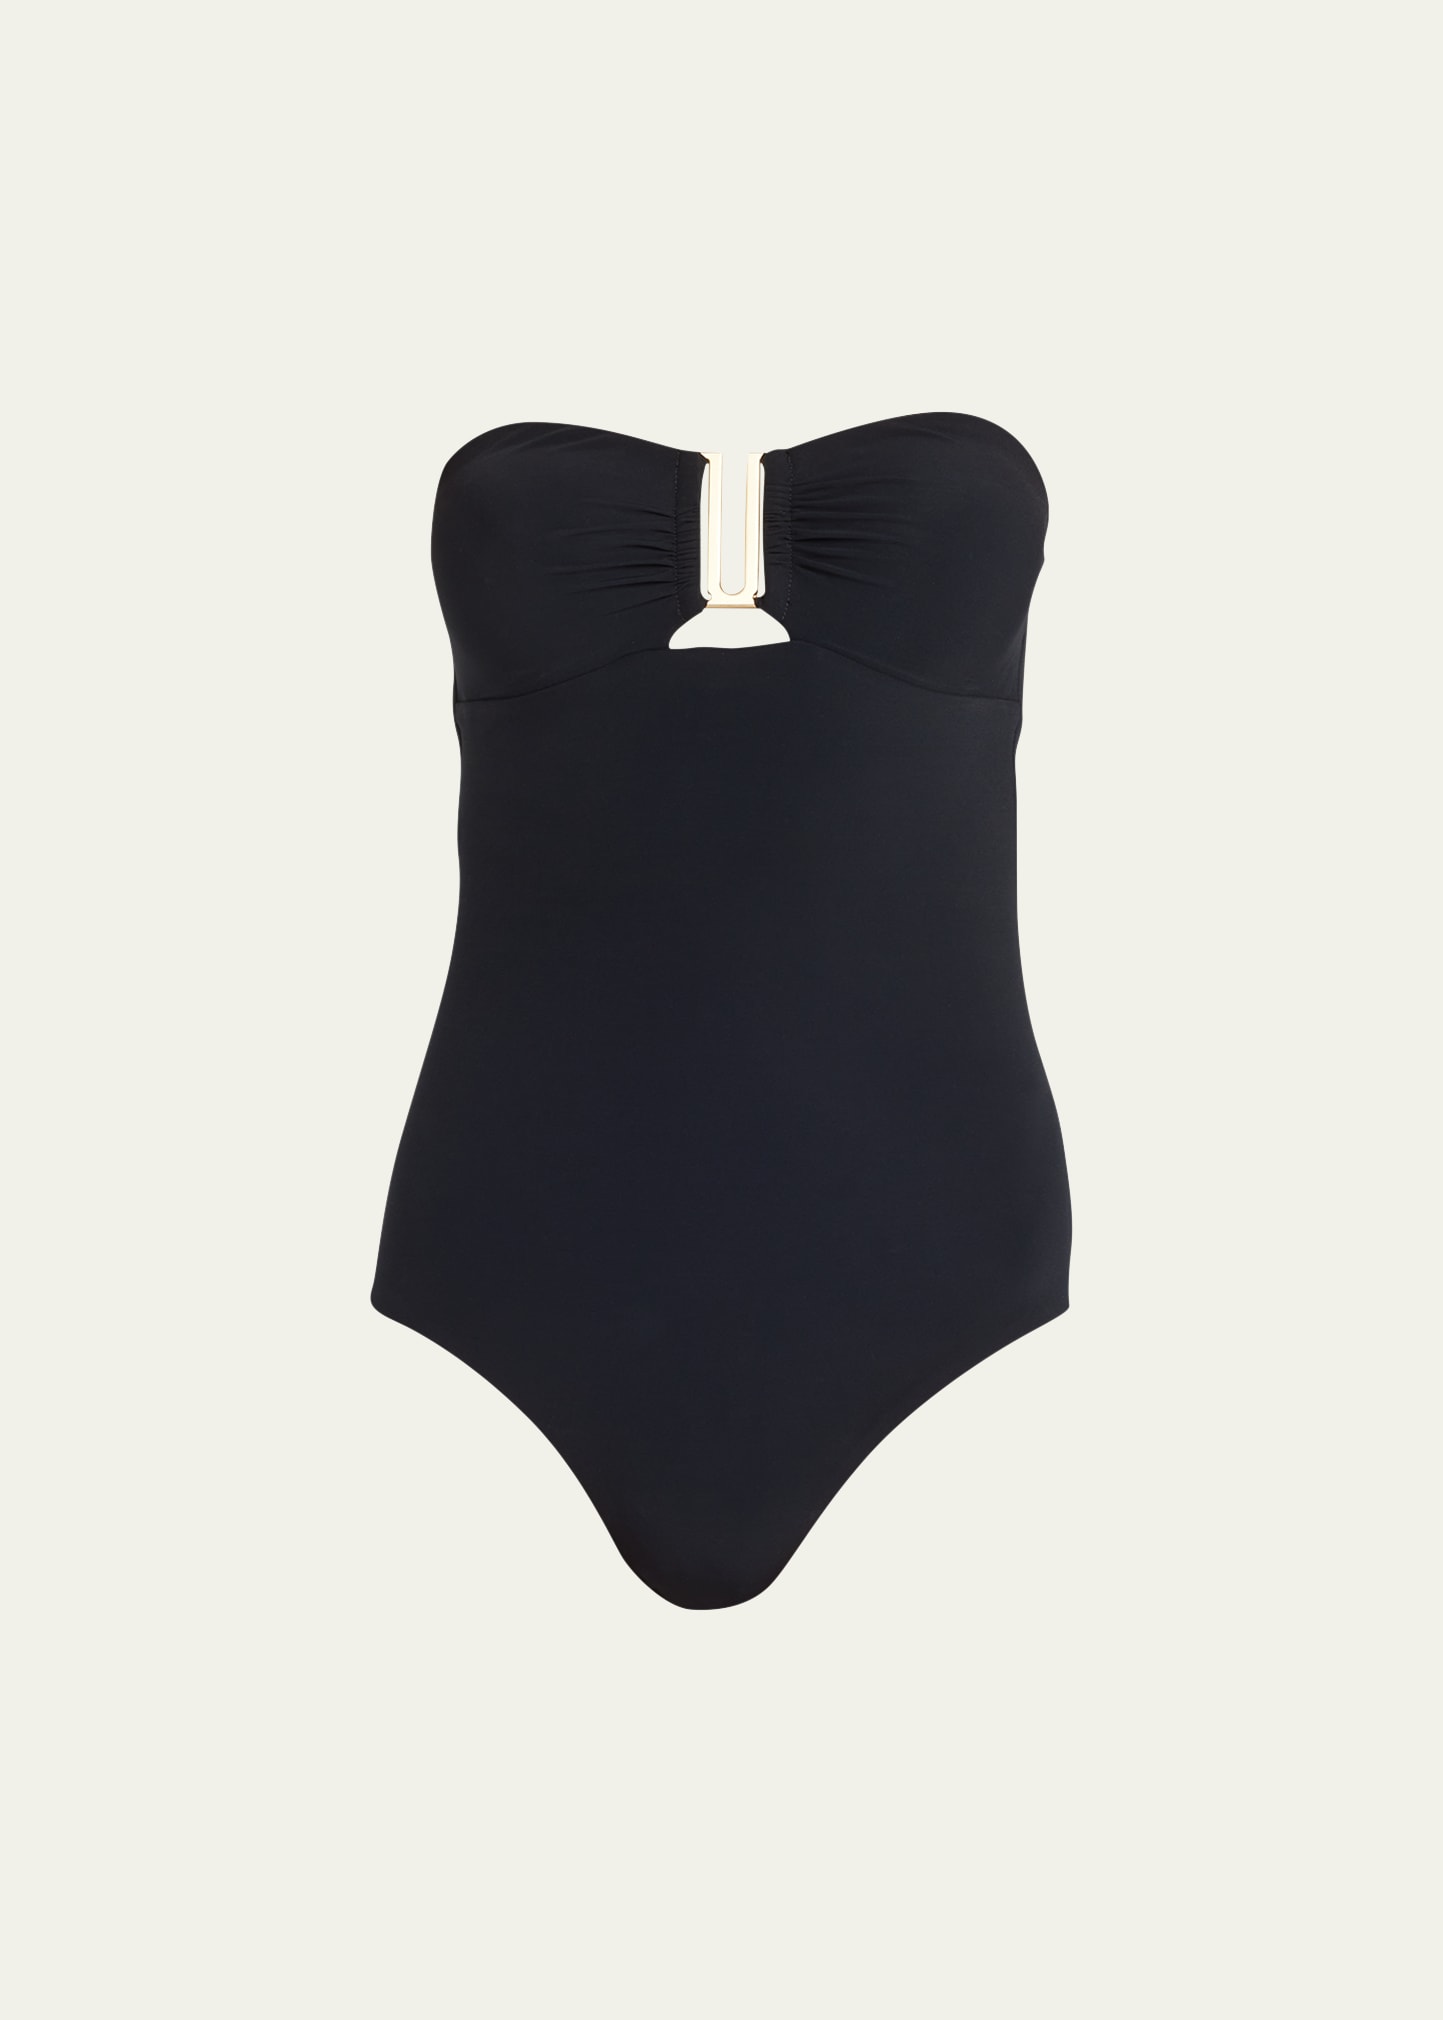 JETS Australia Jetset Bandeau One-Piece Swimsuit